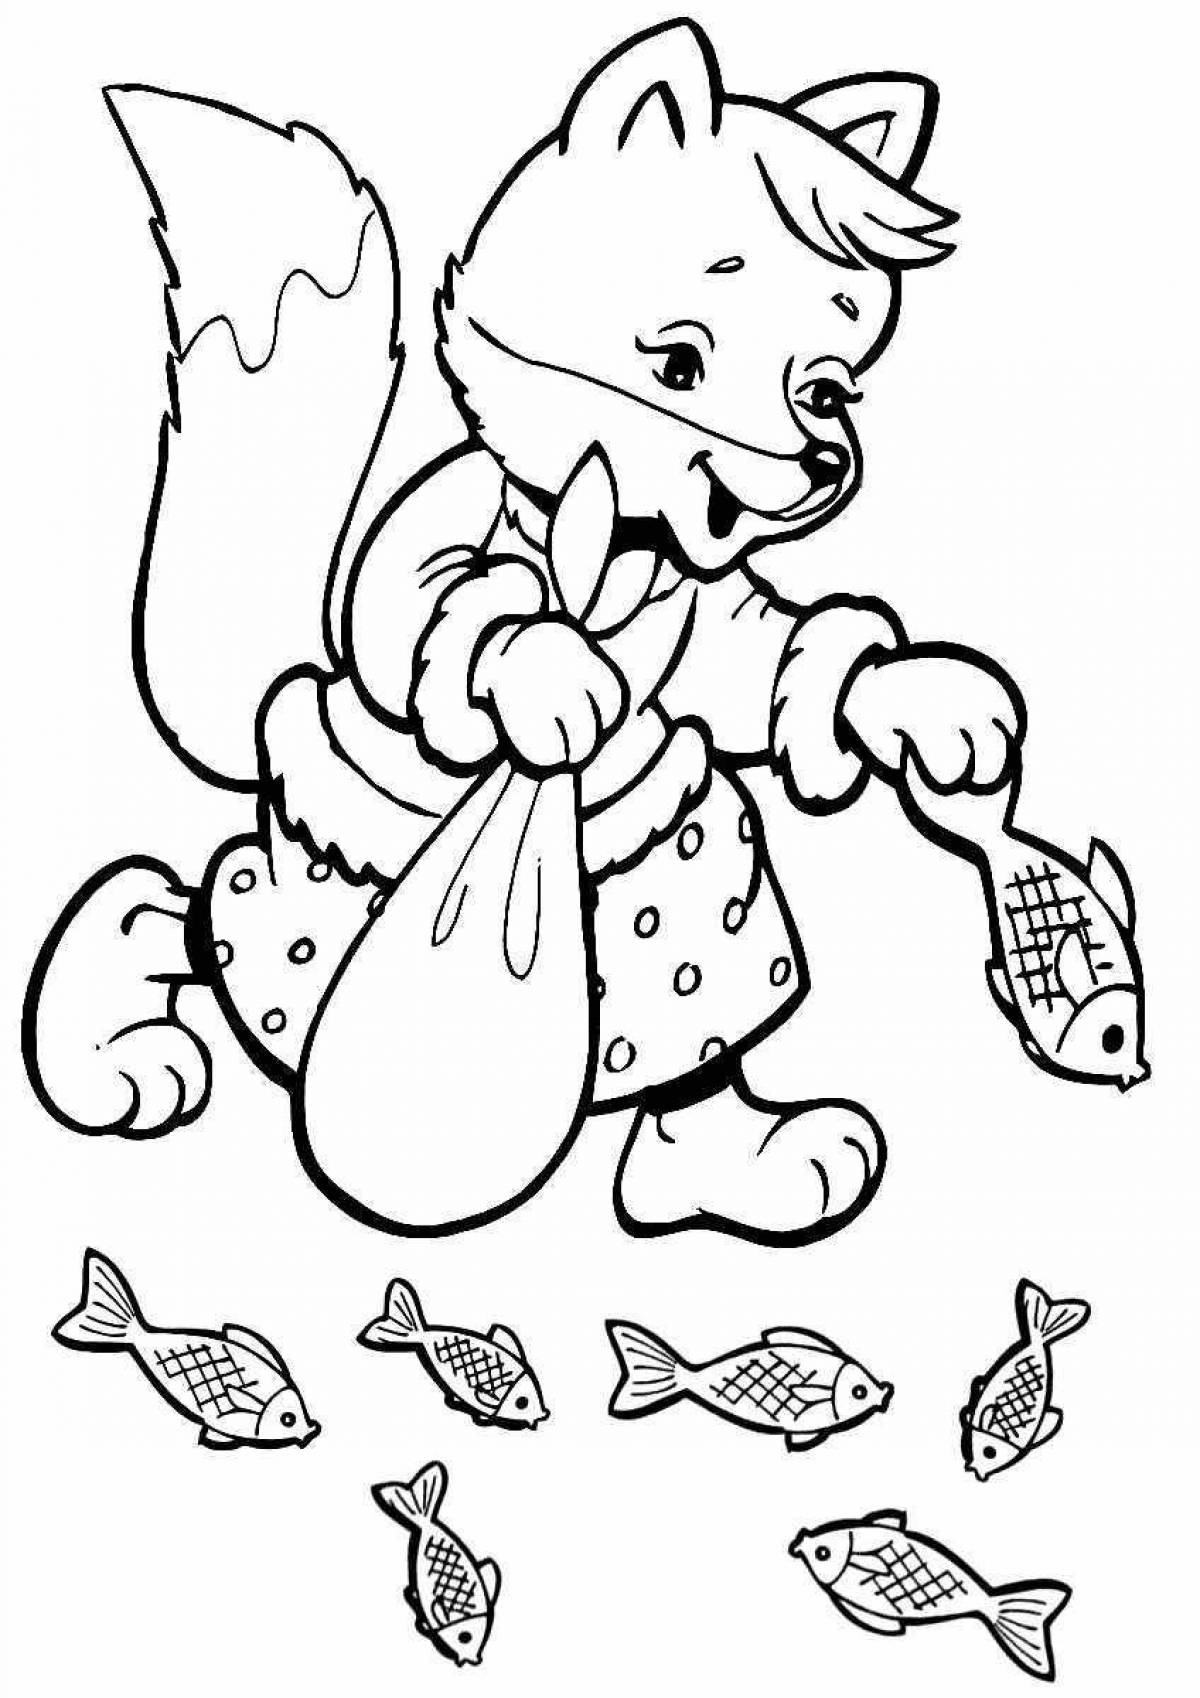 Fancy coloring fox from a fairy tale